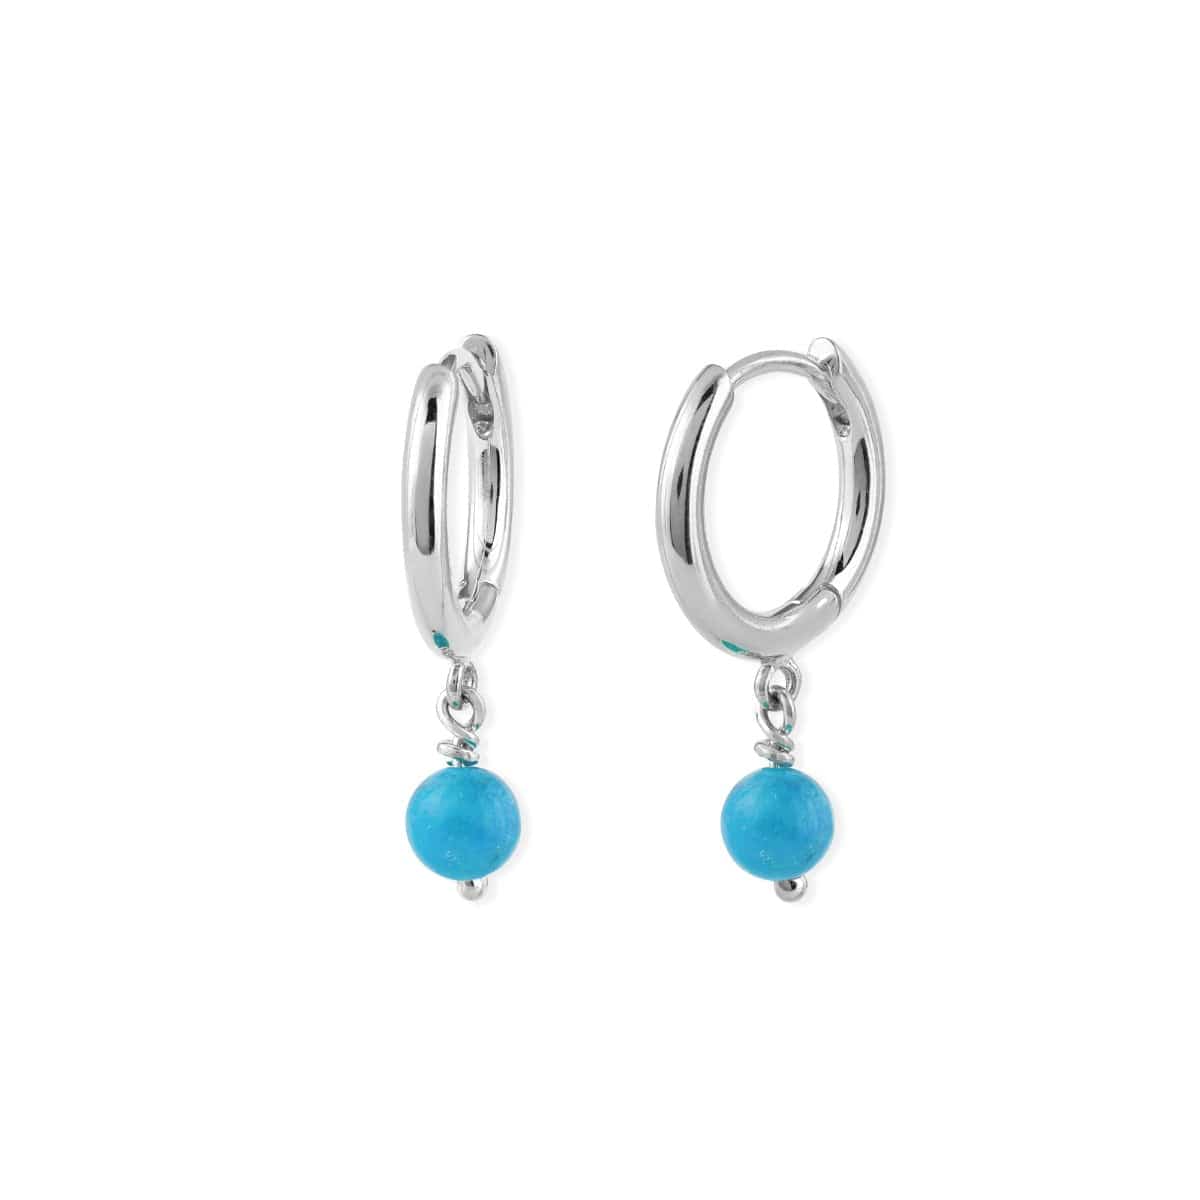 Boma Jewelry Earrings Turquoise / Sterling Silver Treasured Drop Huggies